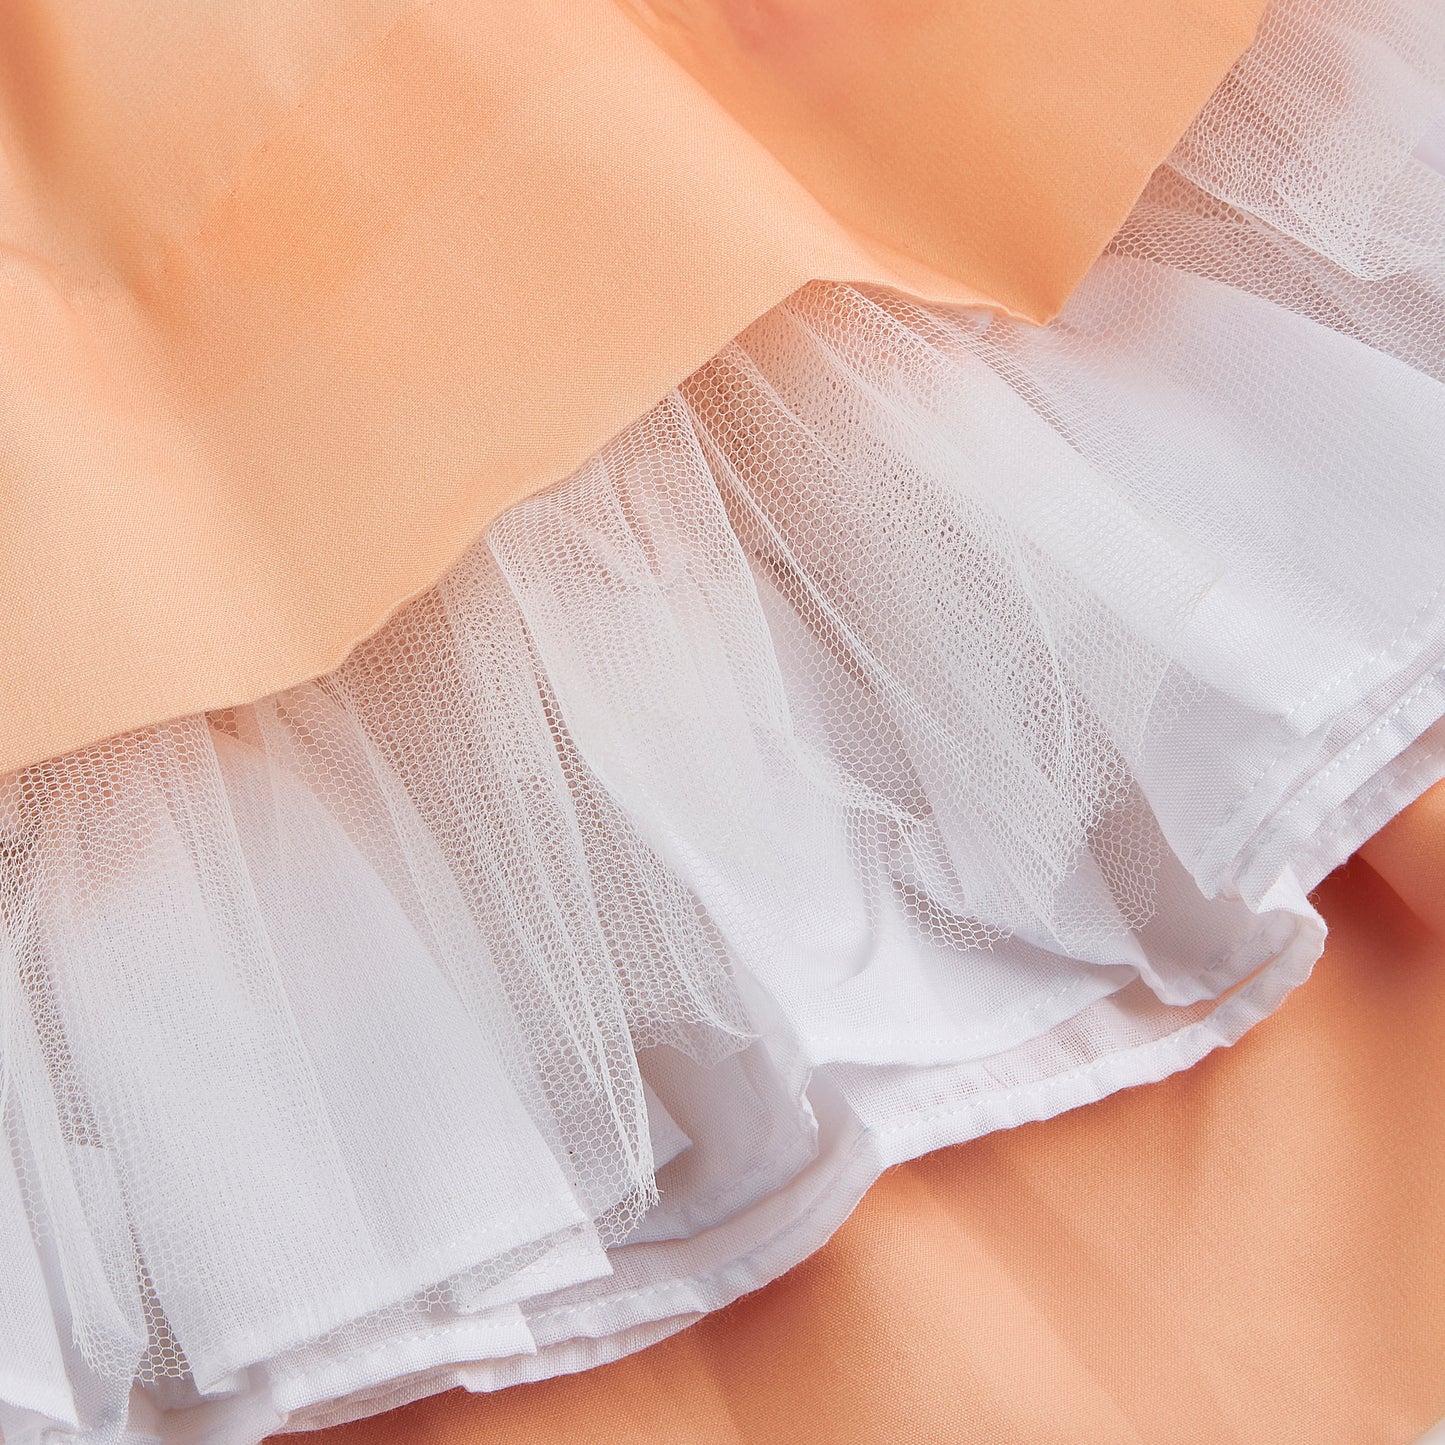 Peach Wrap over Dress